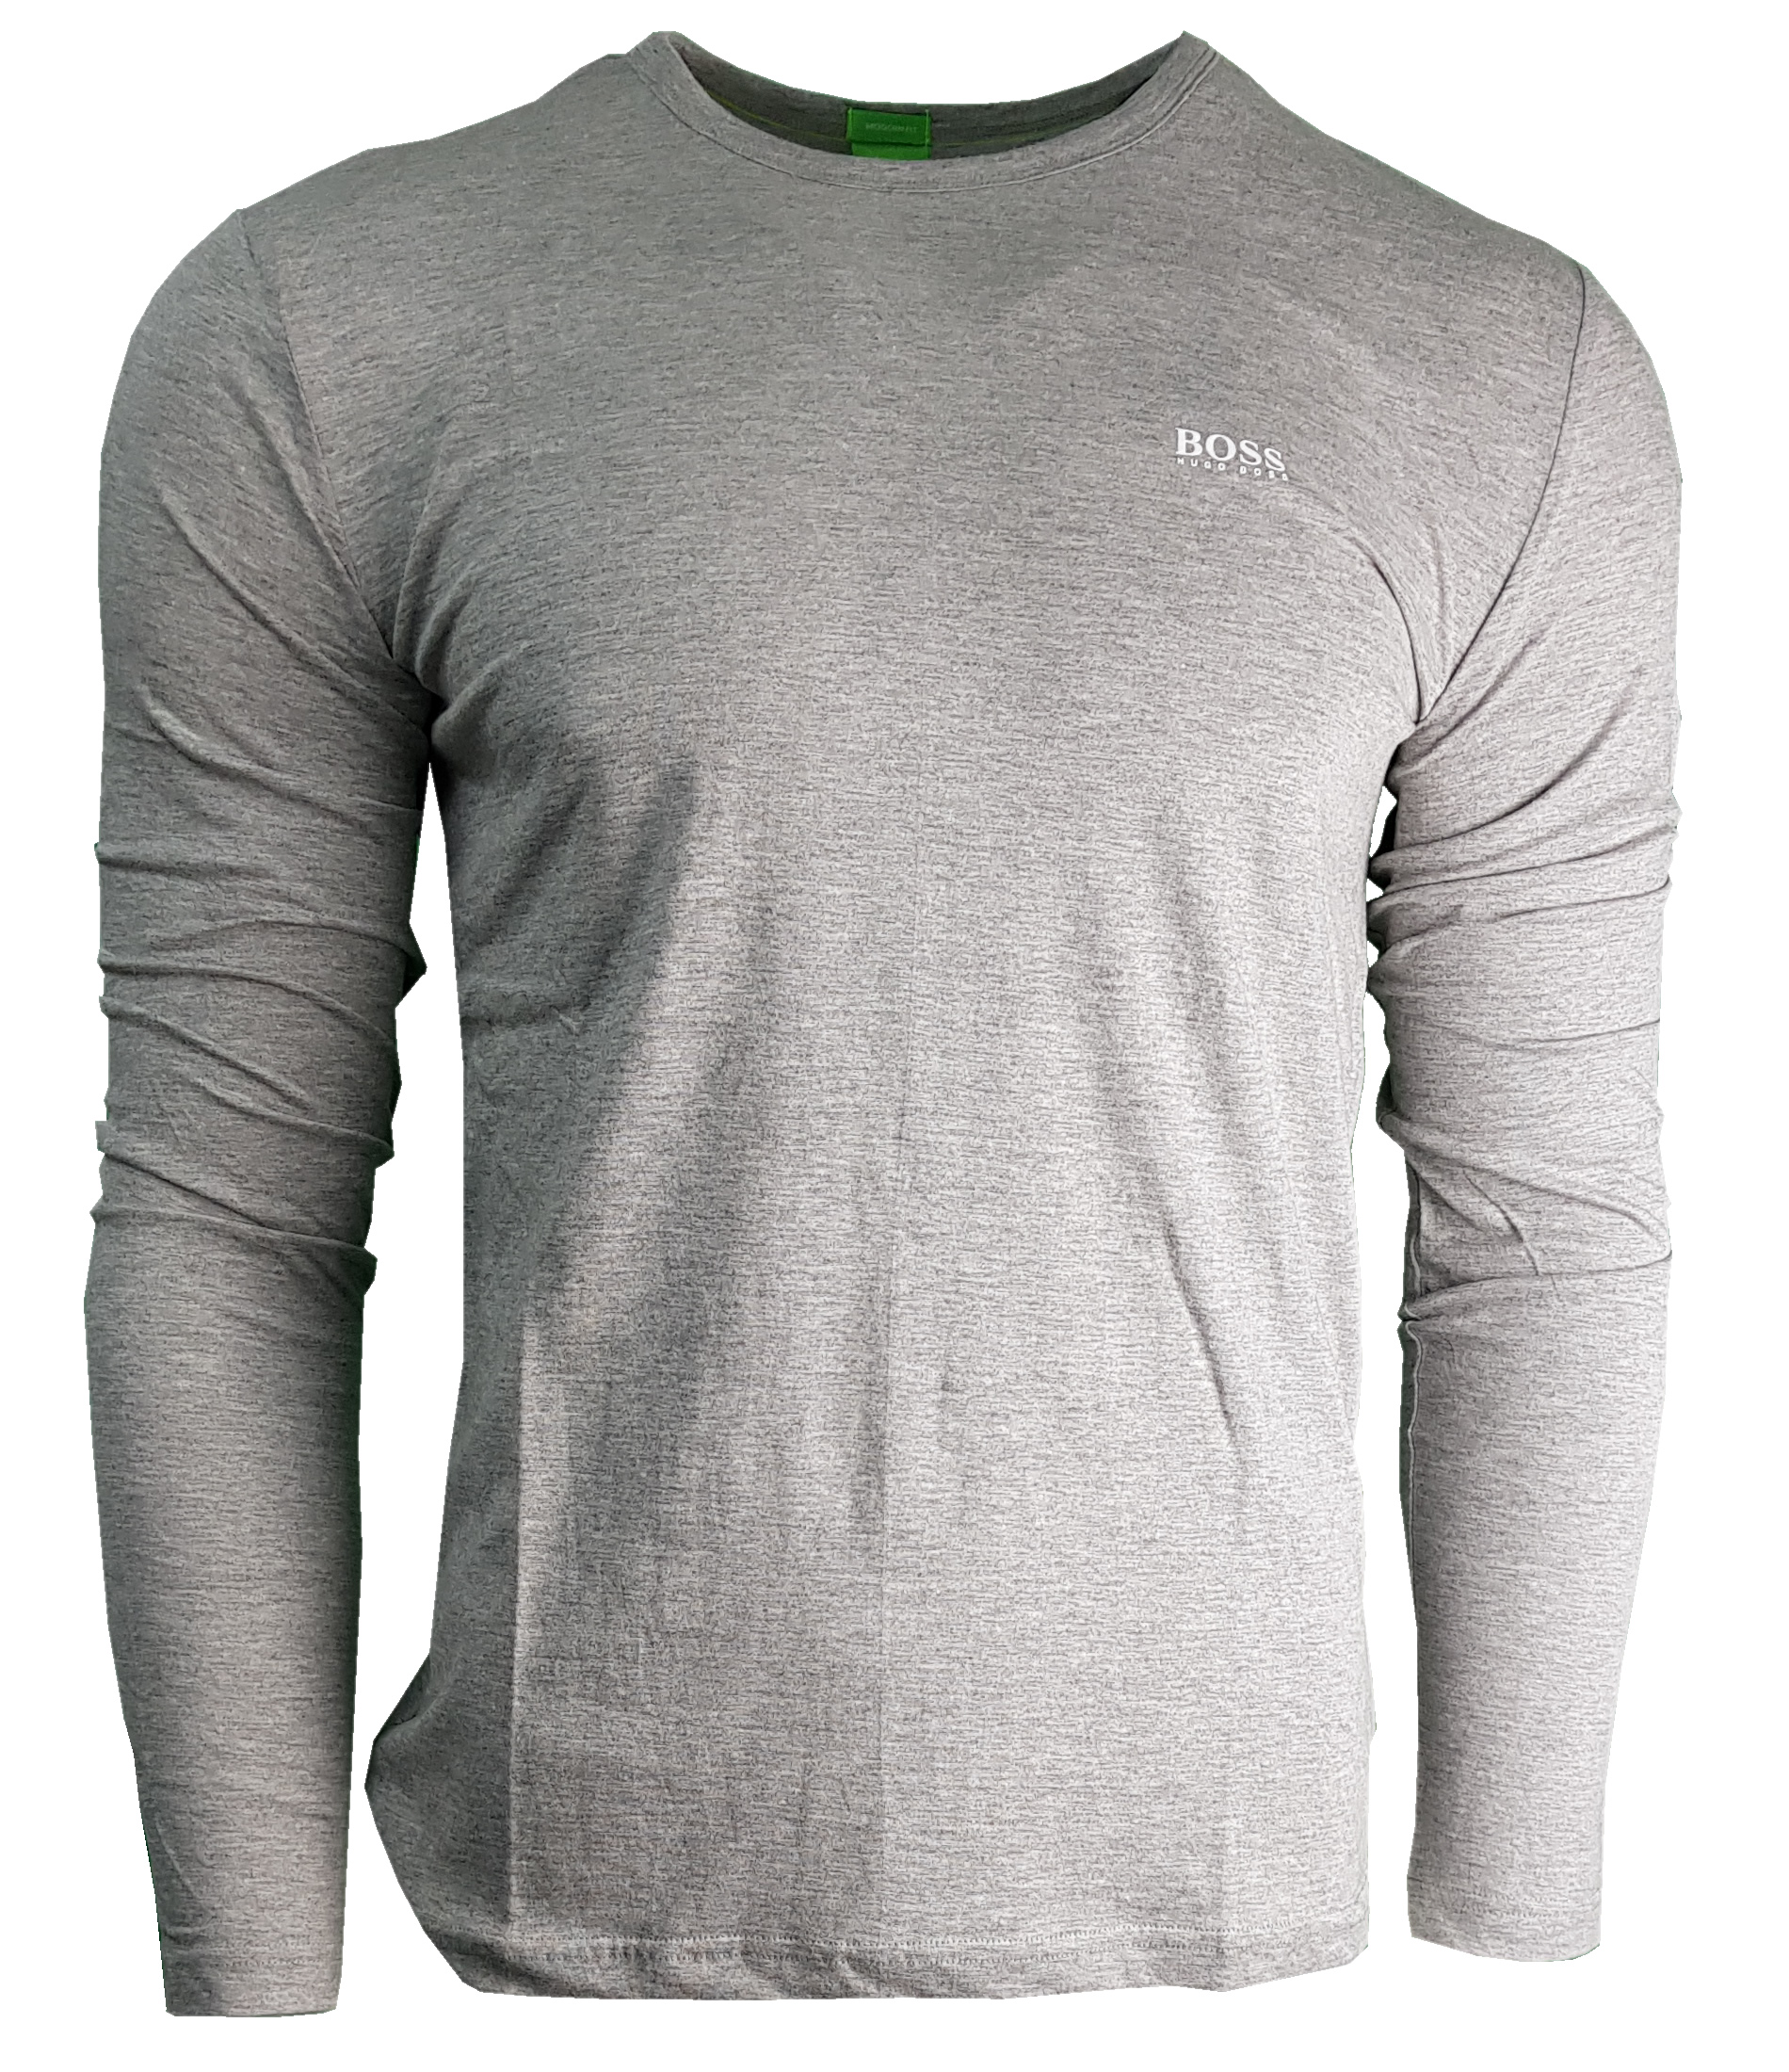 Misvisende ære Vedholdende Hugo Boss Long Sleeve Crew T-Shirt. Modern Fit in Grey - INTOTO7 Menswear